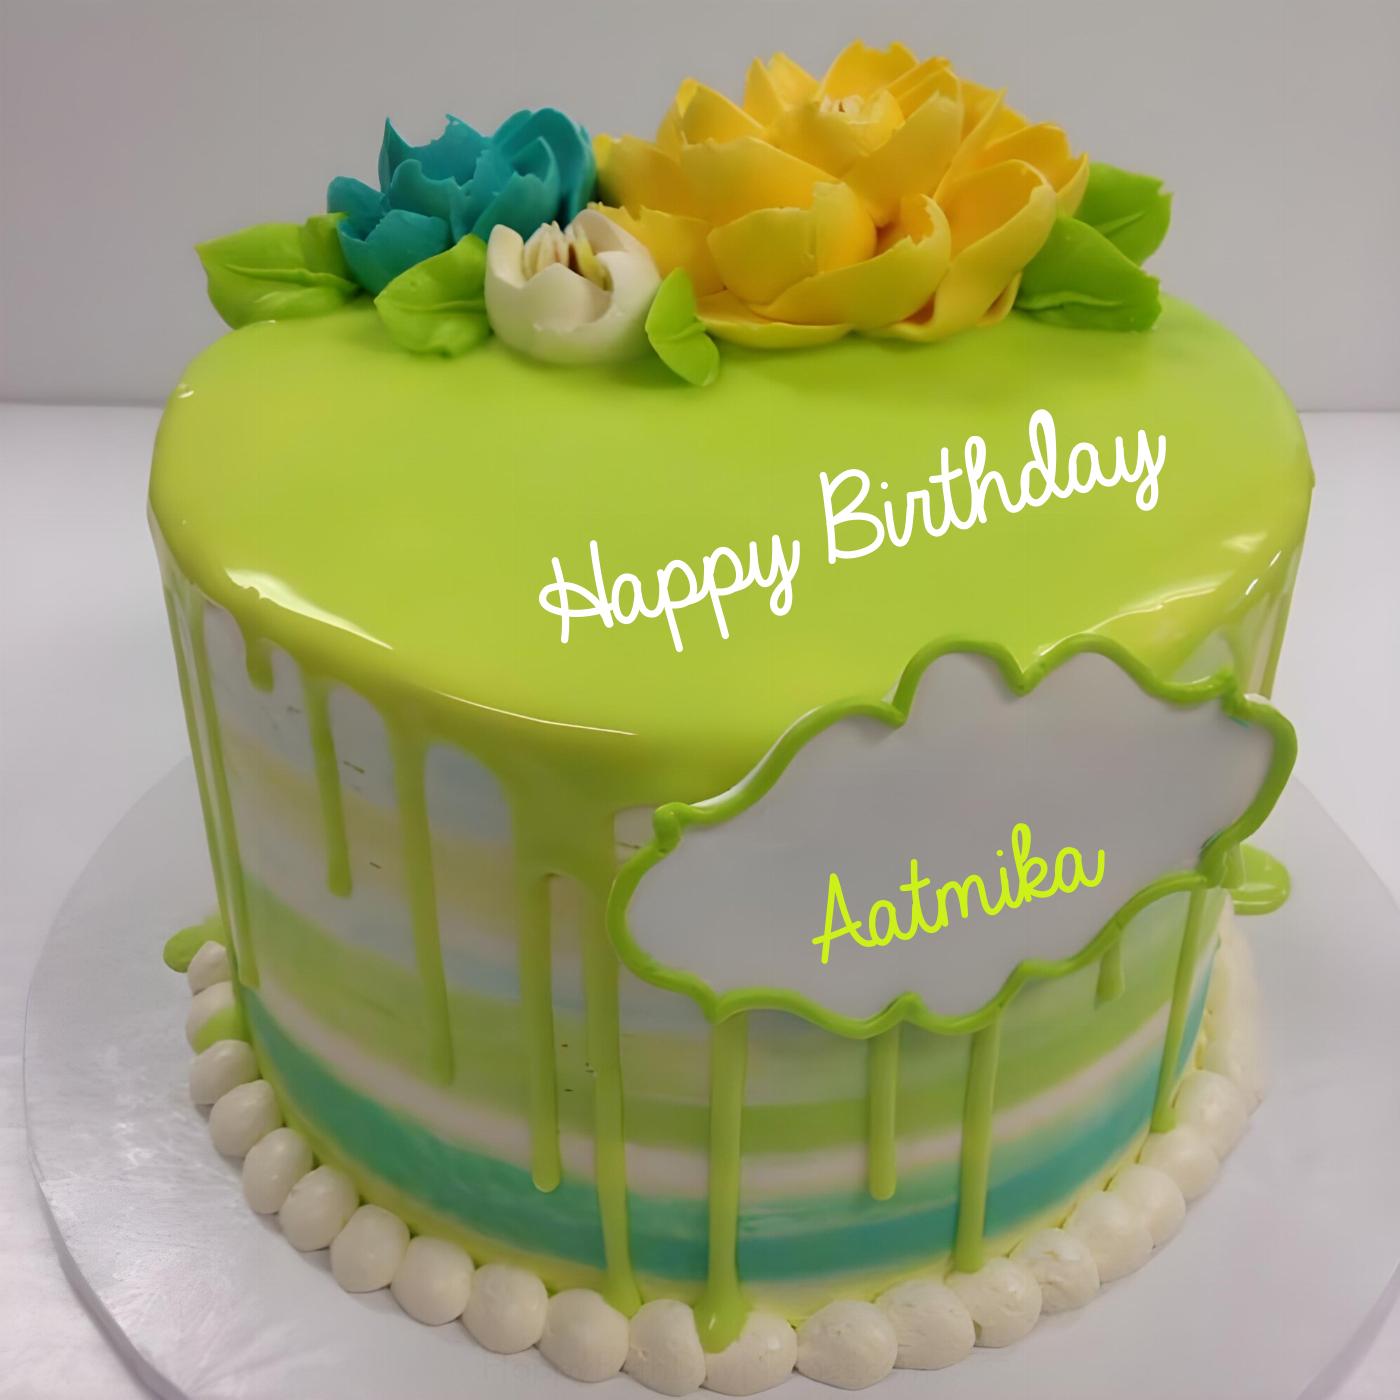 Happy Birthday Aatmika Green Flowers Cake